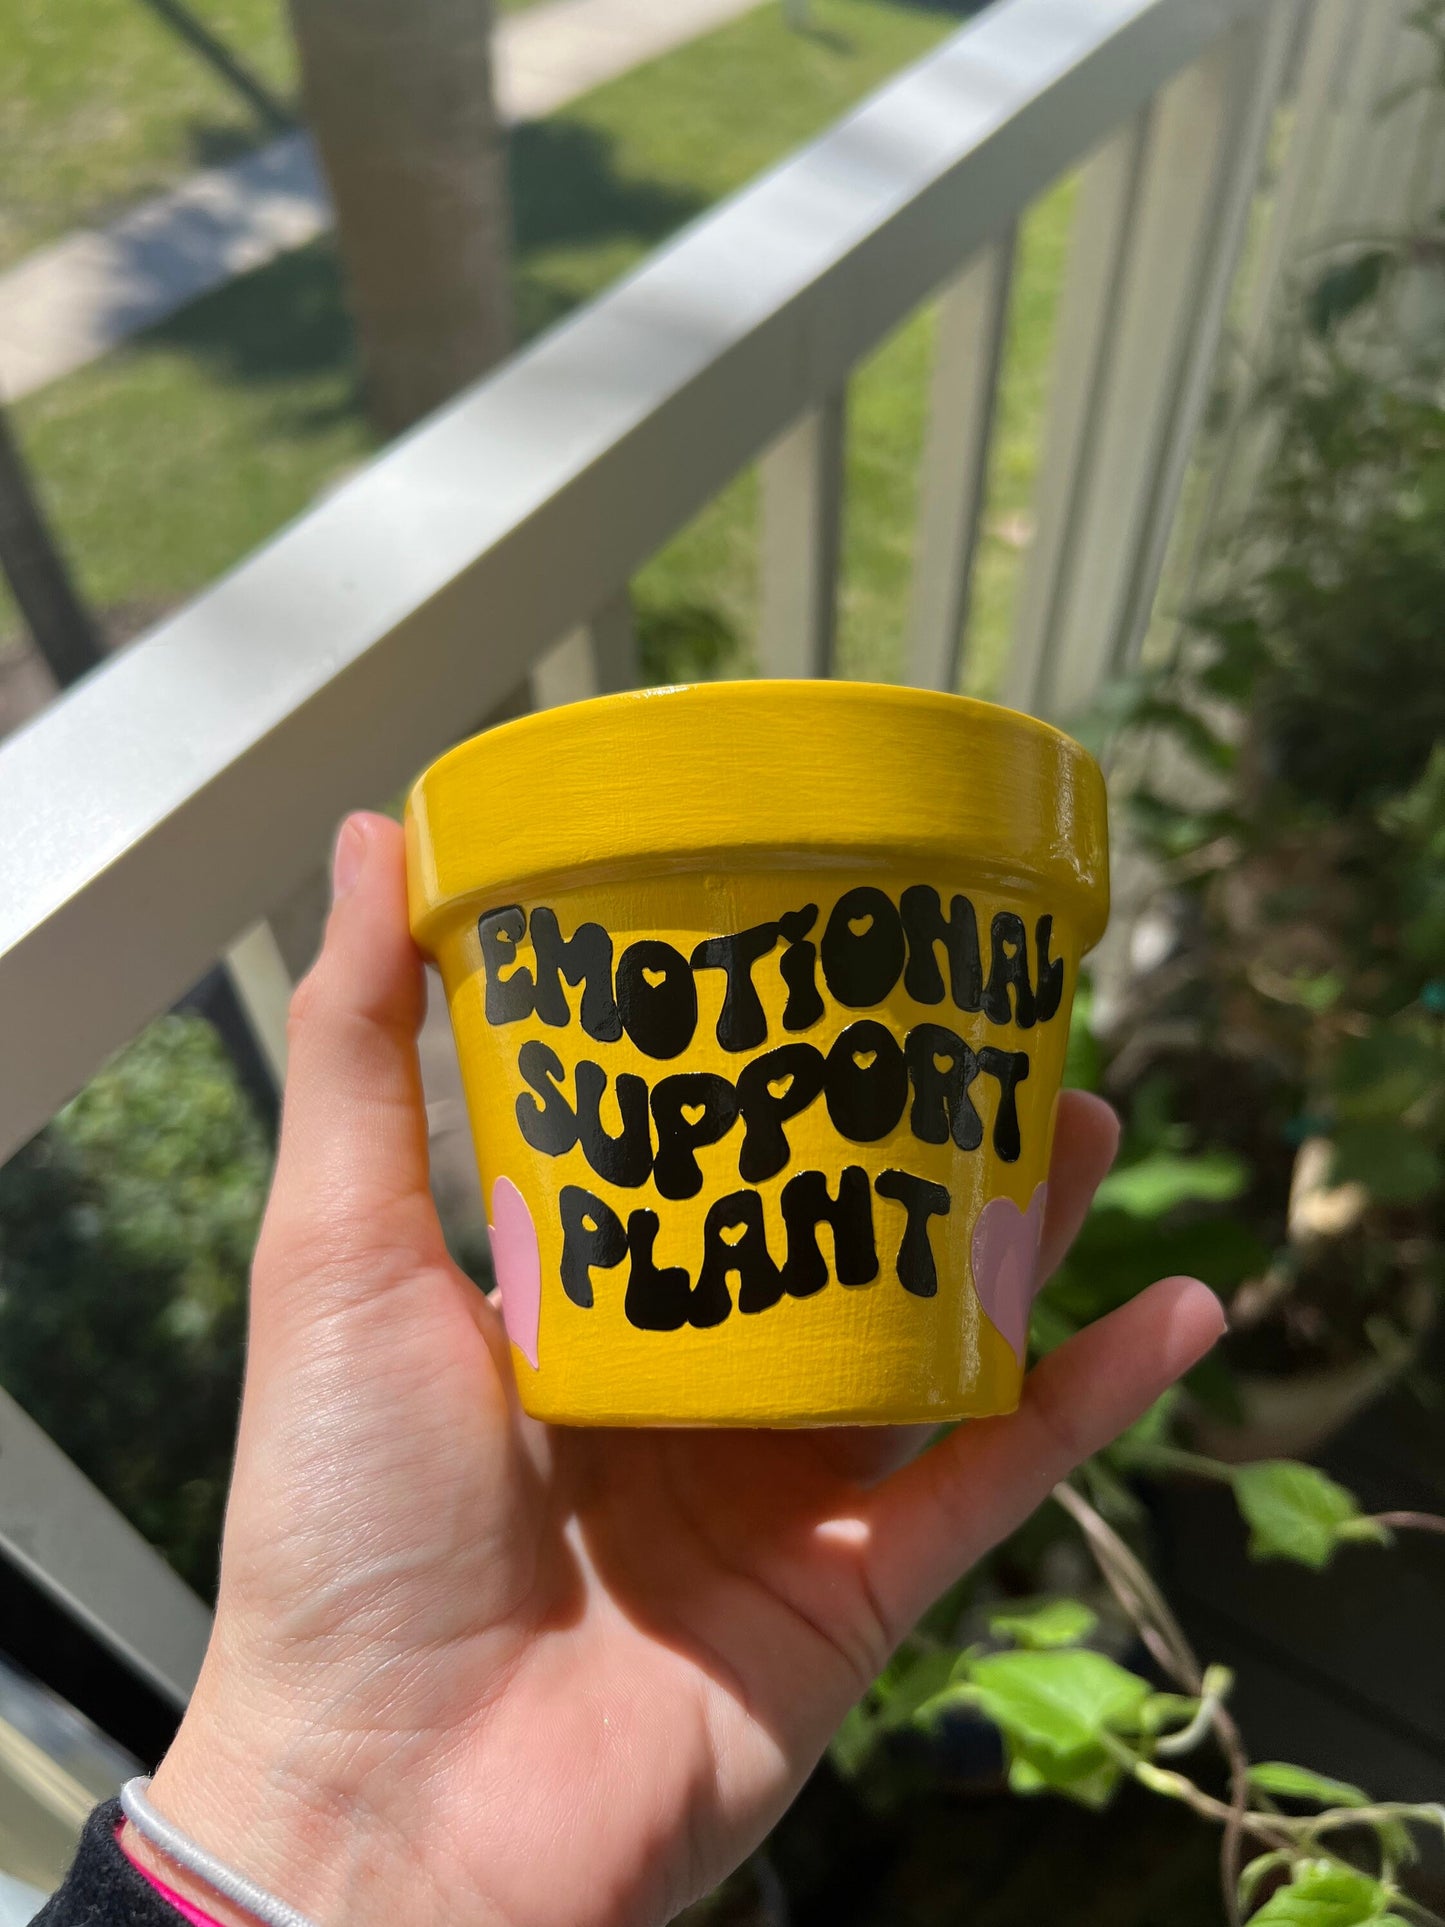 Emotional Support Planter